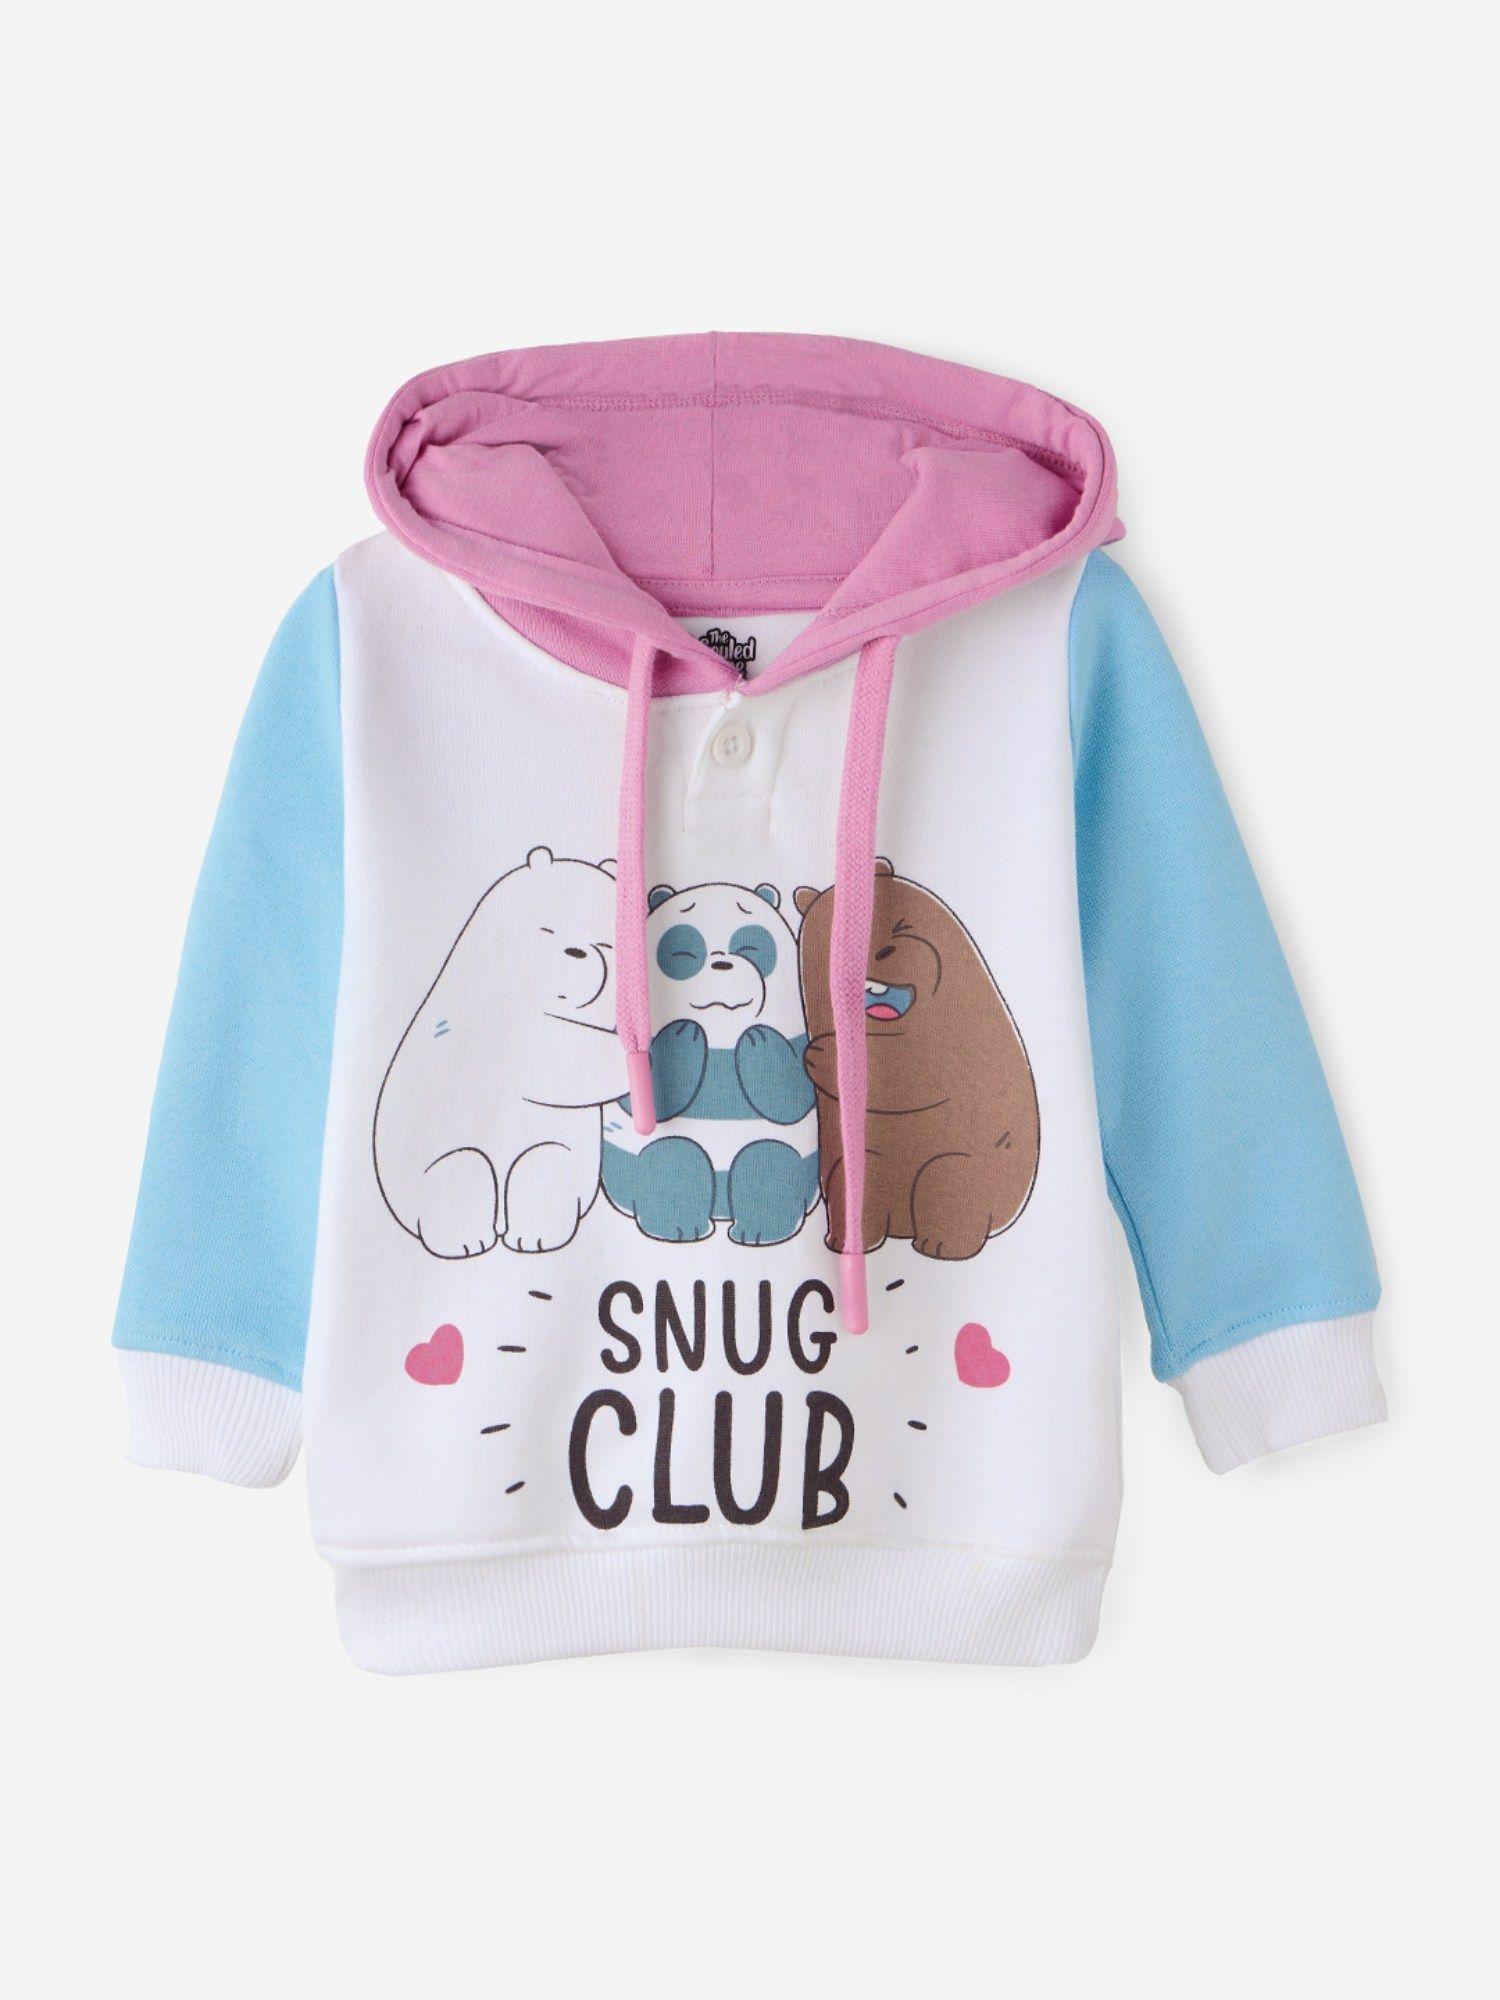 official-we-bare-bears:-snug-club-girls-cotton-hoodie